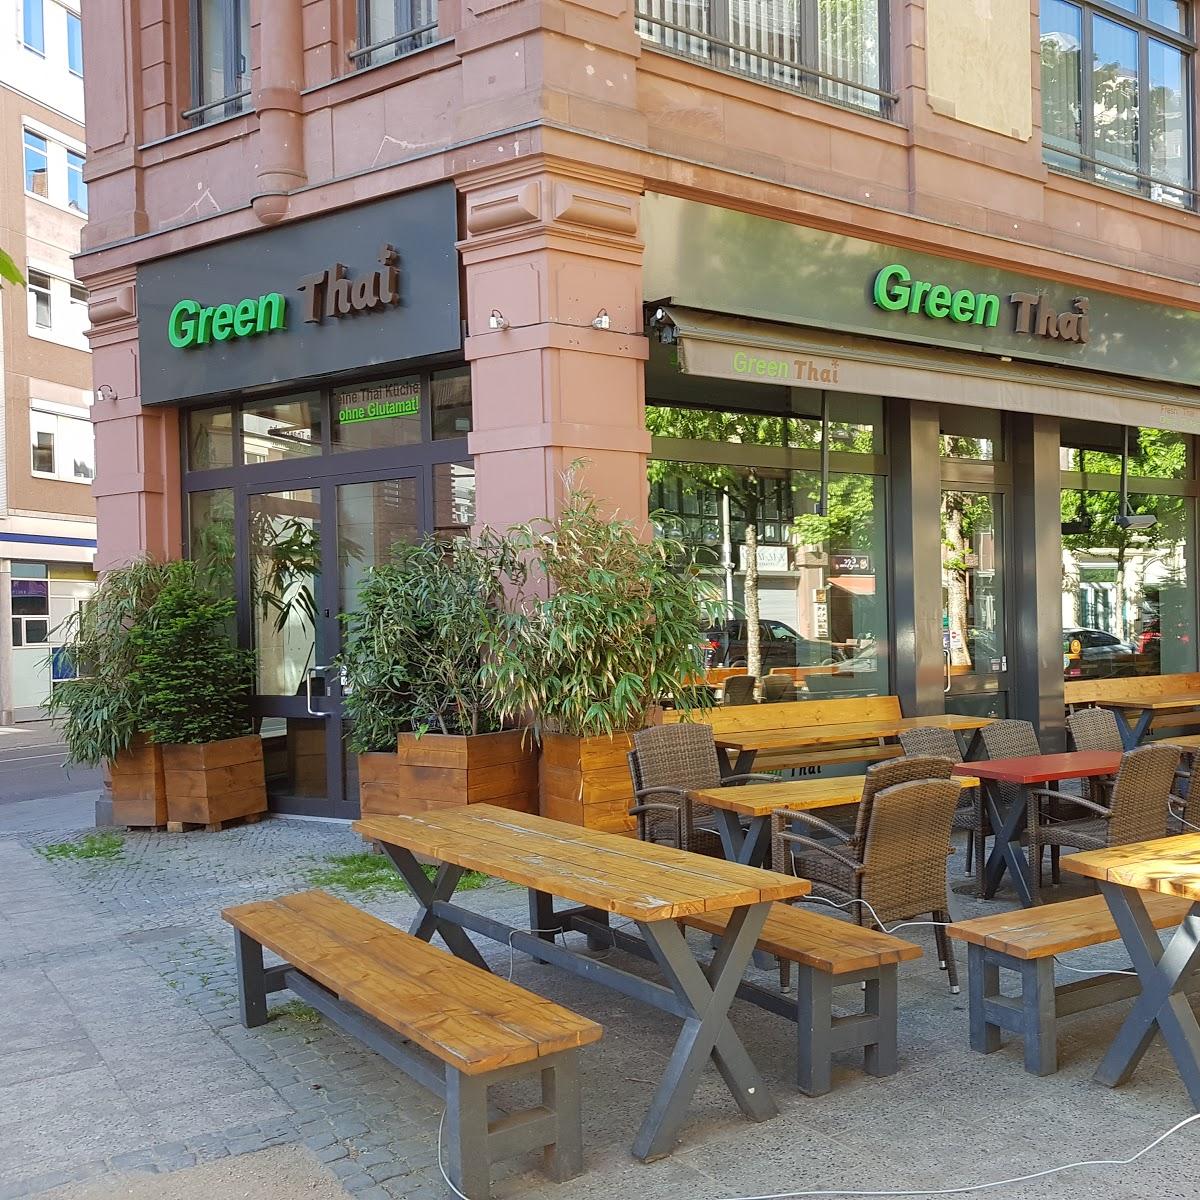 Restaurant "Green Thai" in Frankfurt am Main